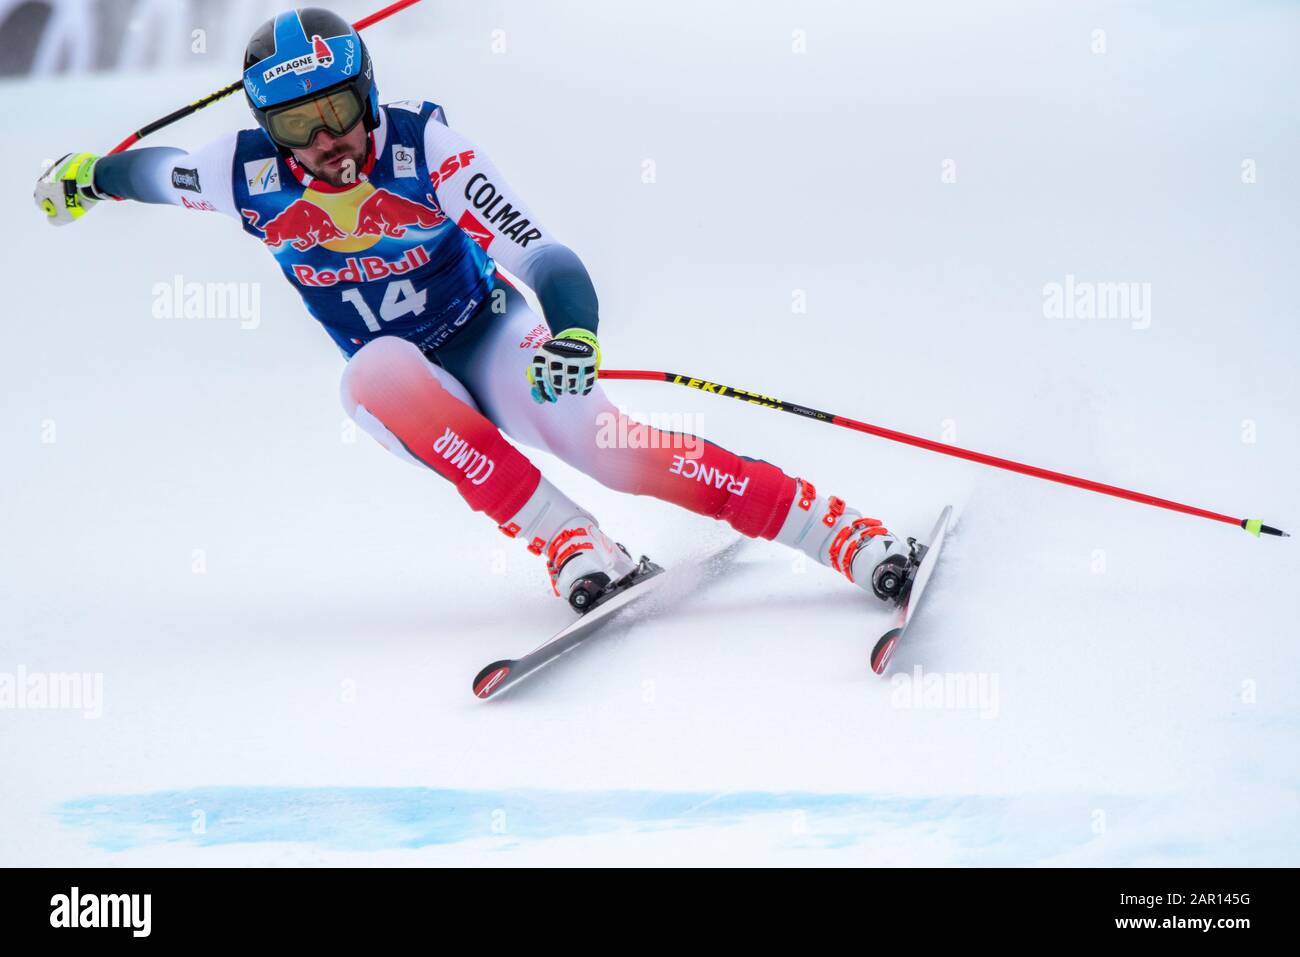 Kitzbuehel, Austria. 25th Jan 2020. Maxence Muzaton of France at the Ski Alpin: 80. Hahnenkamm Race 2020 - Audi FIS Alpine Ski World Cup - Men's Downhill at the Streif on January 25, 2020 in Kitzbuehel, AUSTRIA. Stock Photo